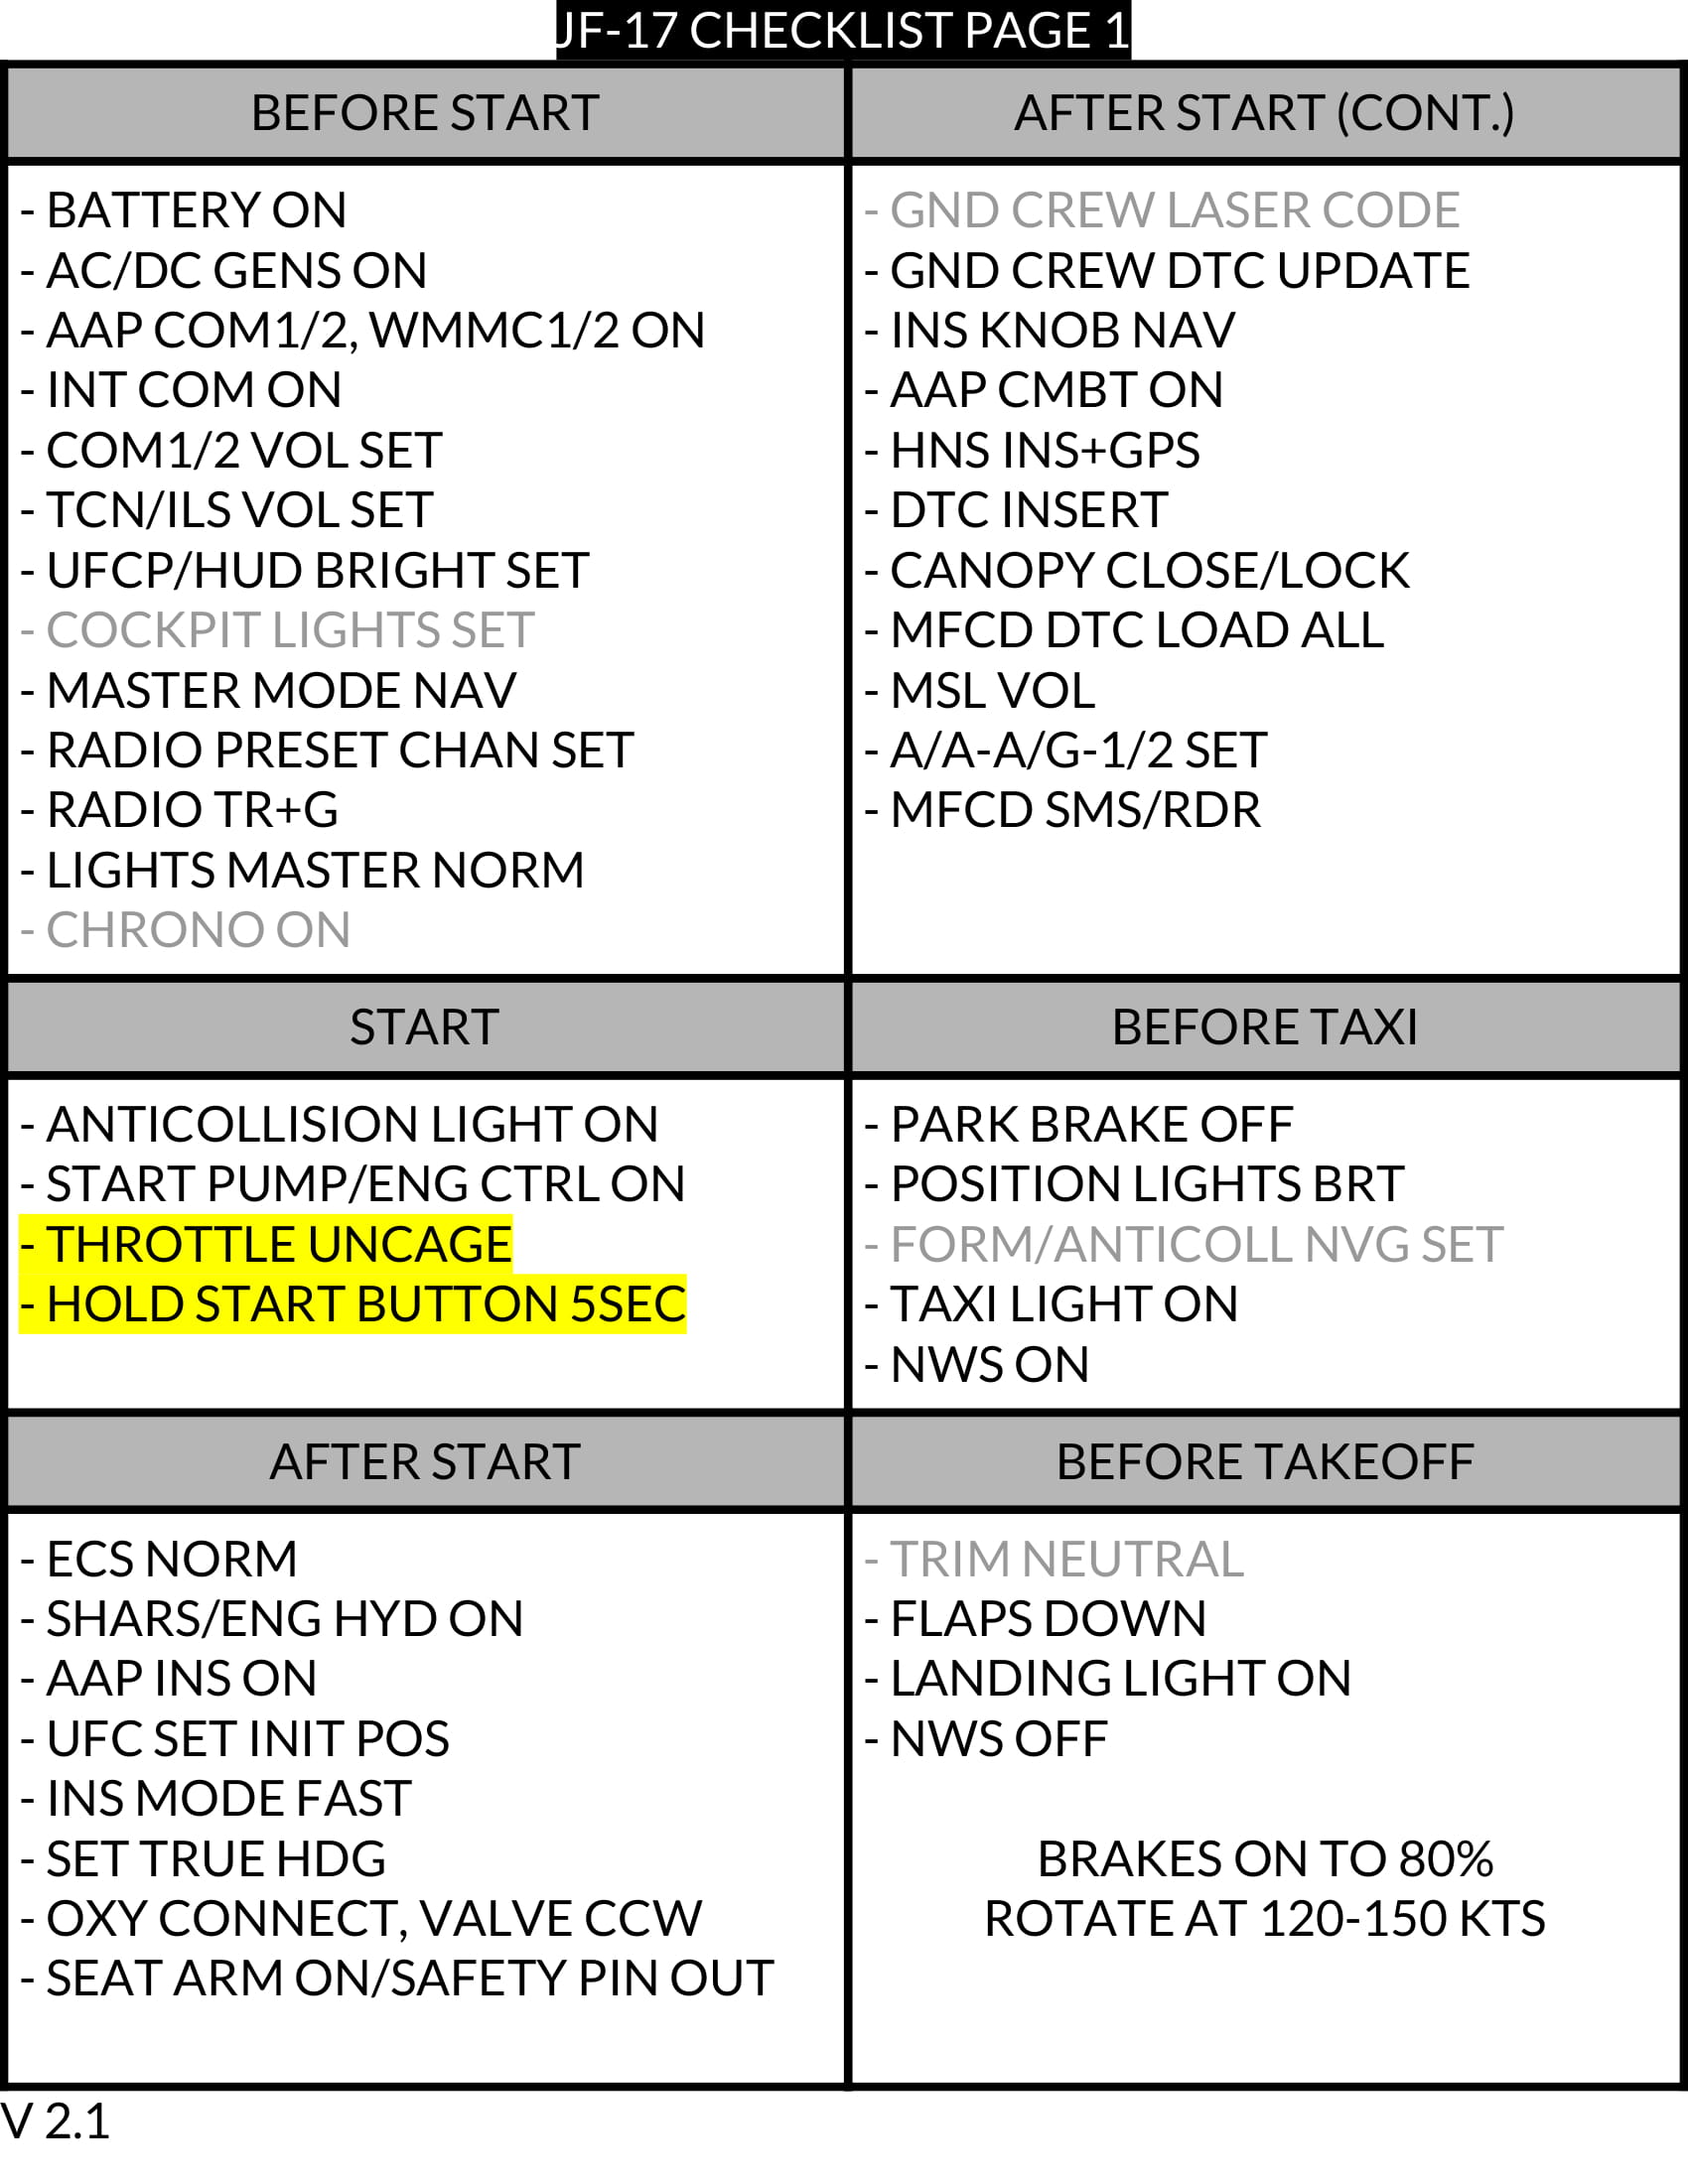 JF-17 Enhanced Checklist v2.1